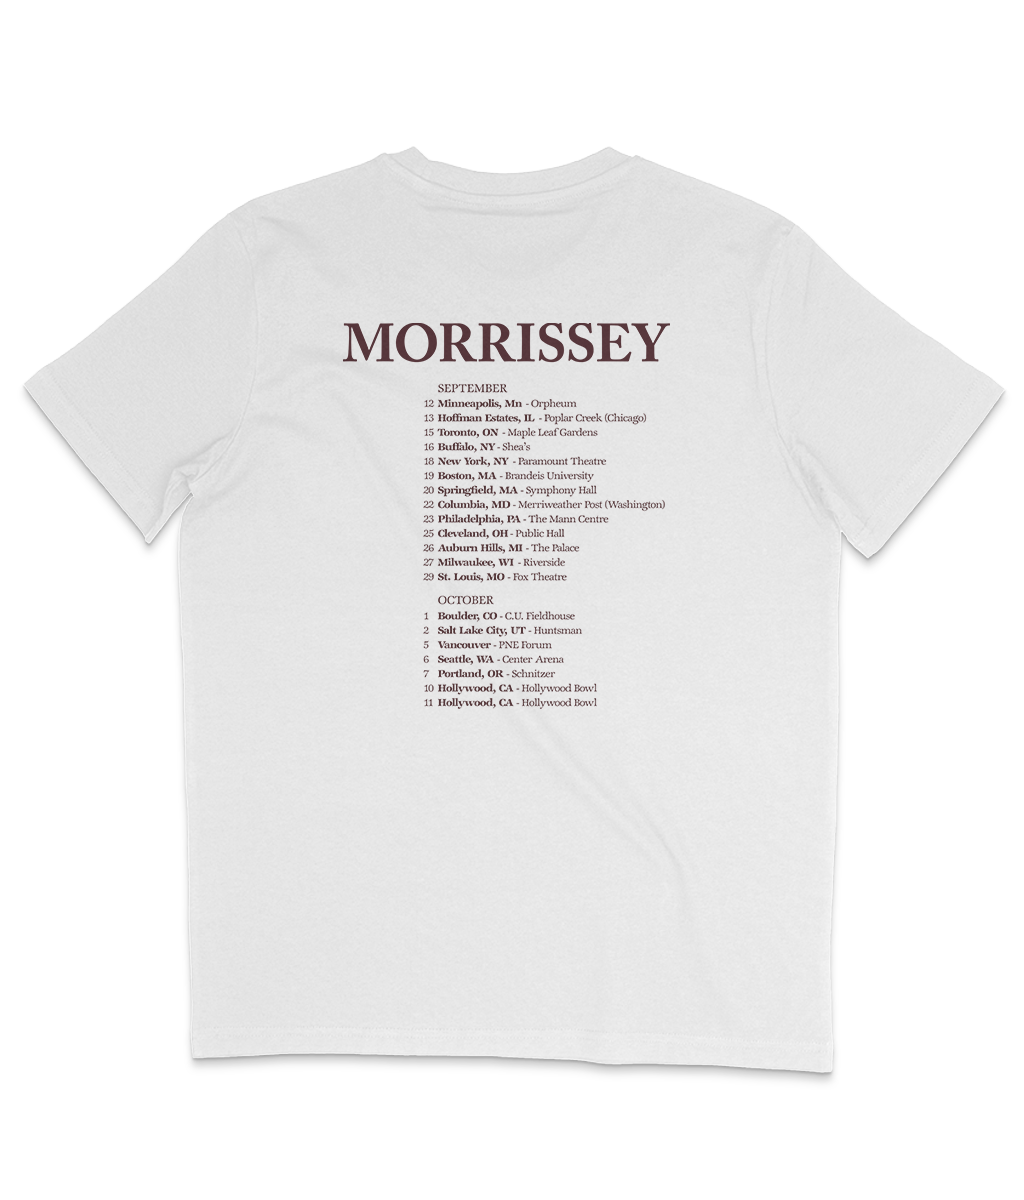 Morrissey - Your Arsenal Tour - 1992 - Skinhead Girls - Back Print